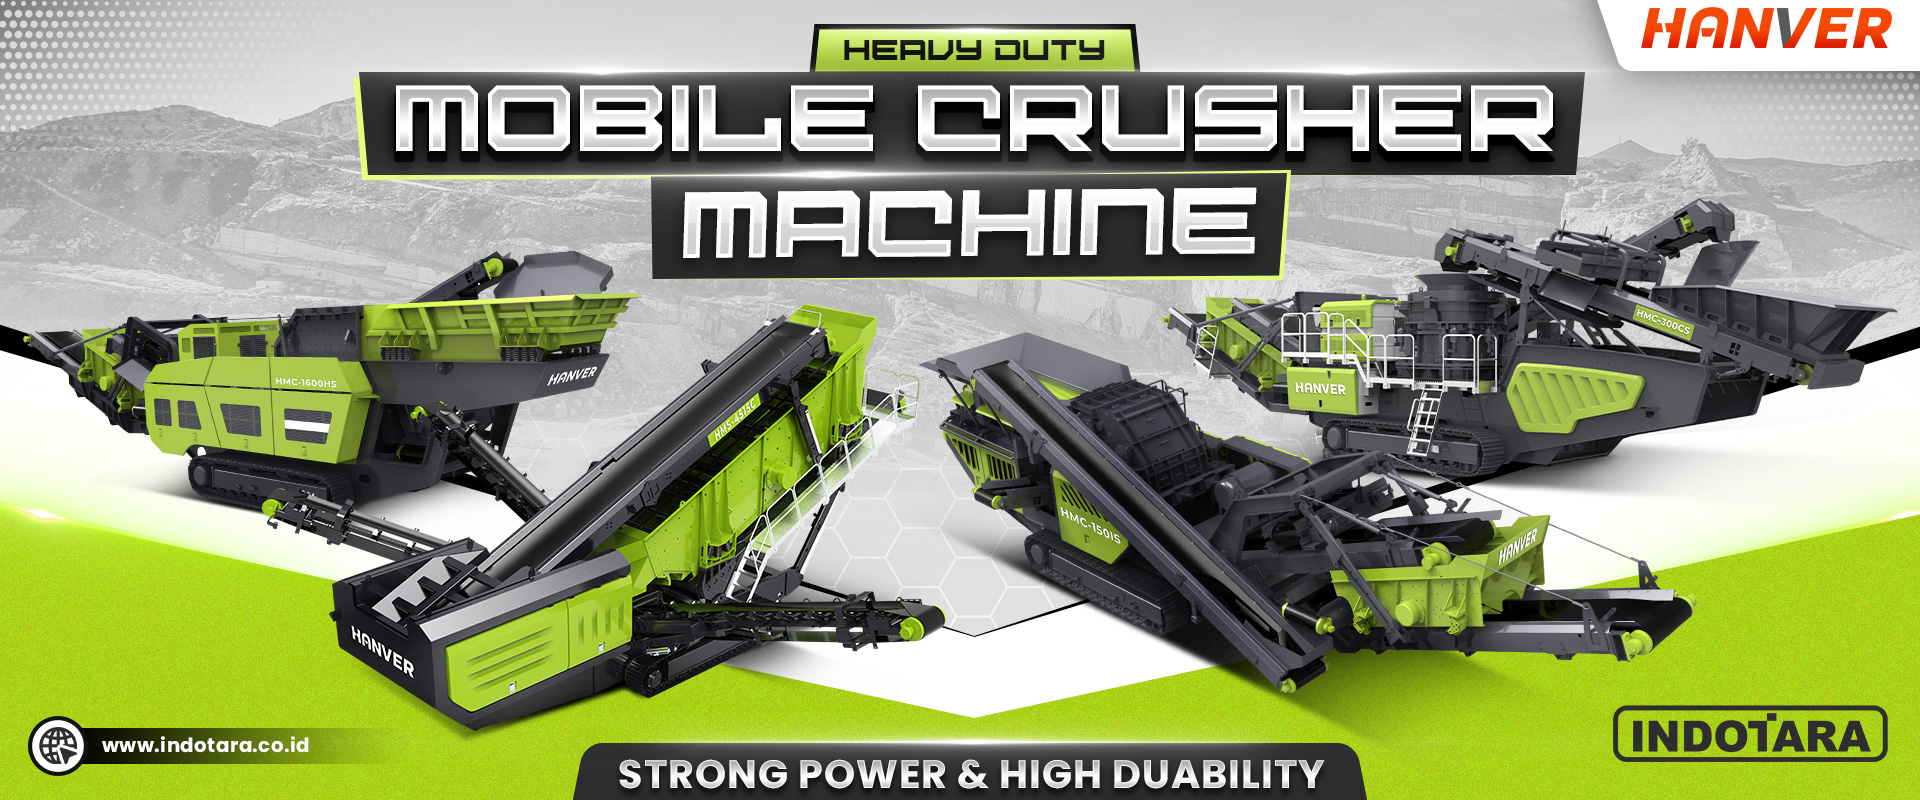 Hanver Mobile Crusher Machine